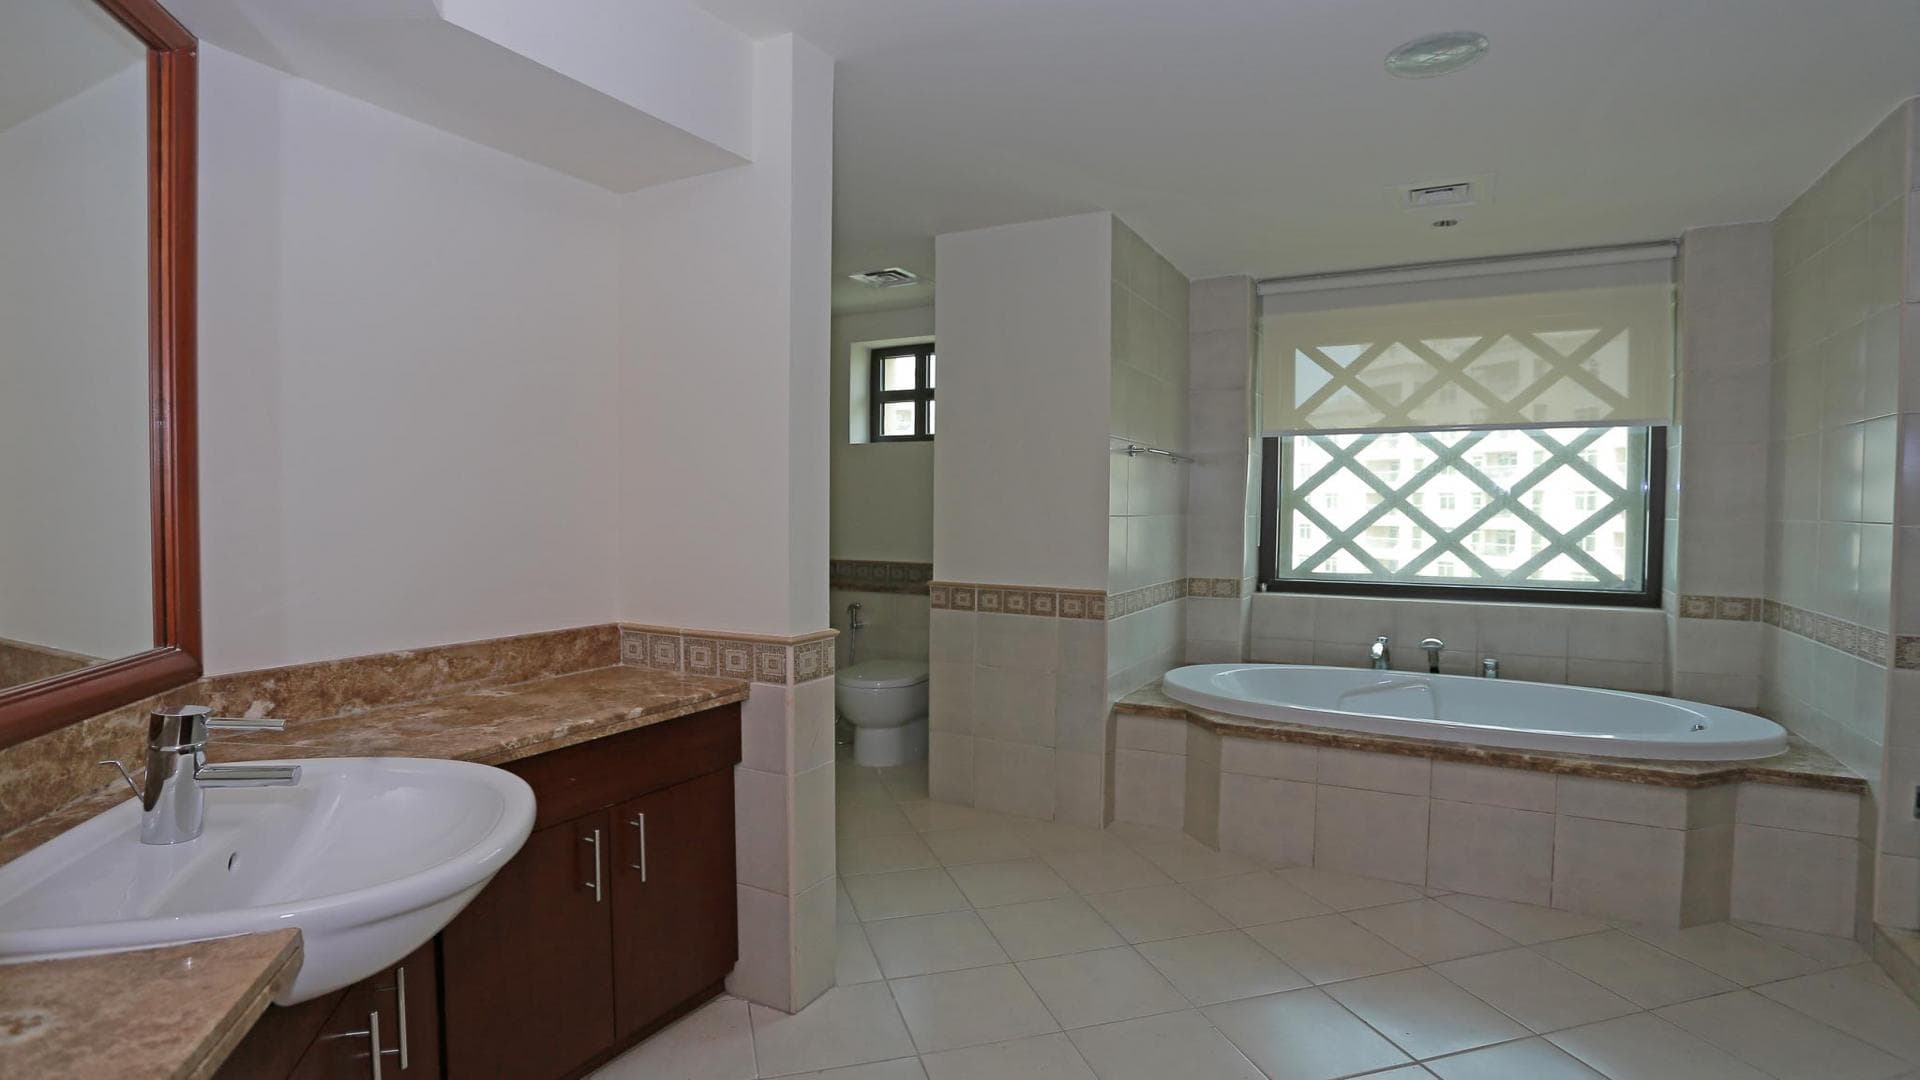 3 Bedroom Apartment For Sale Boulevard Plaza 1 Lp37433 2e1b538c16d78000.jpg